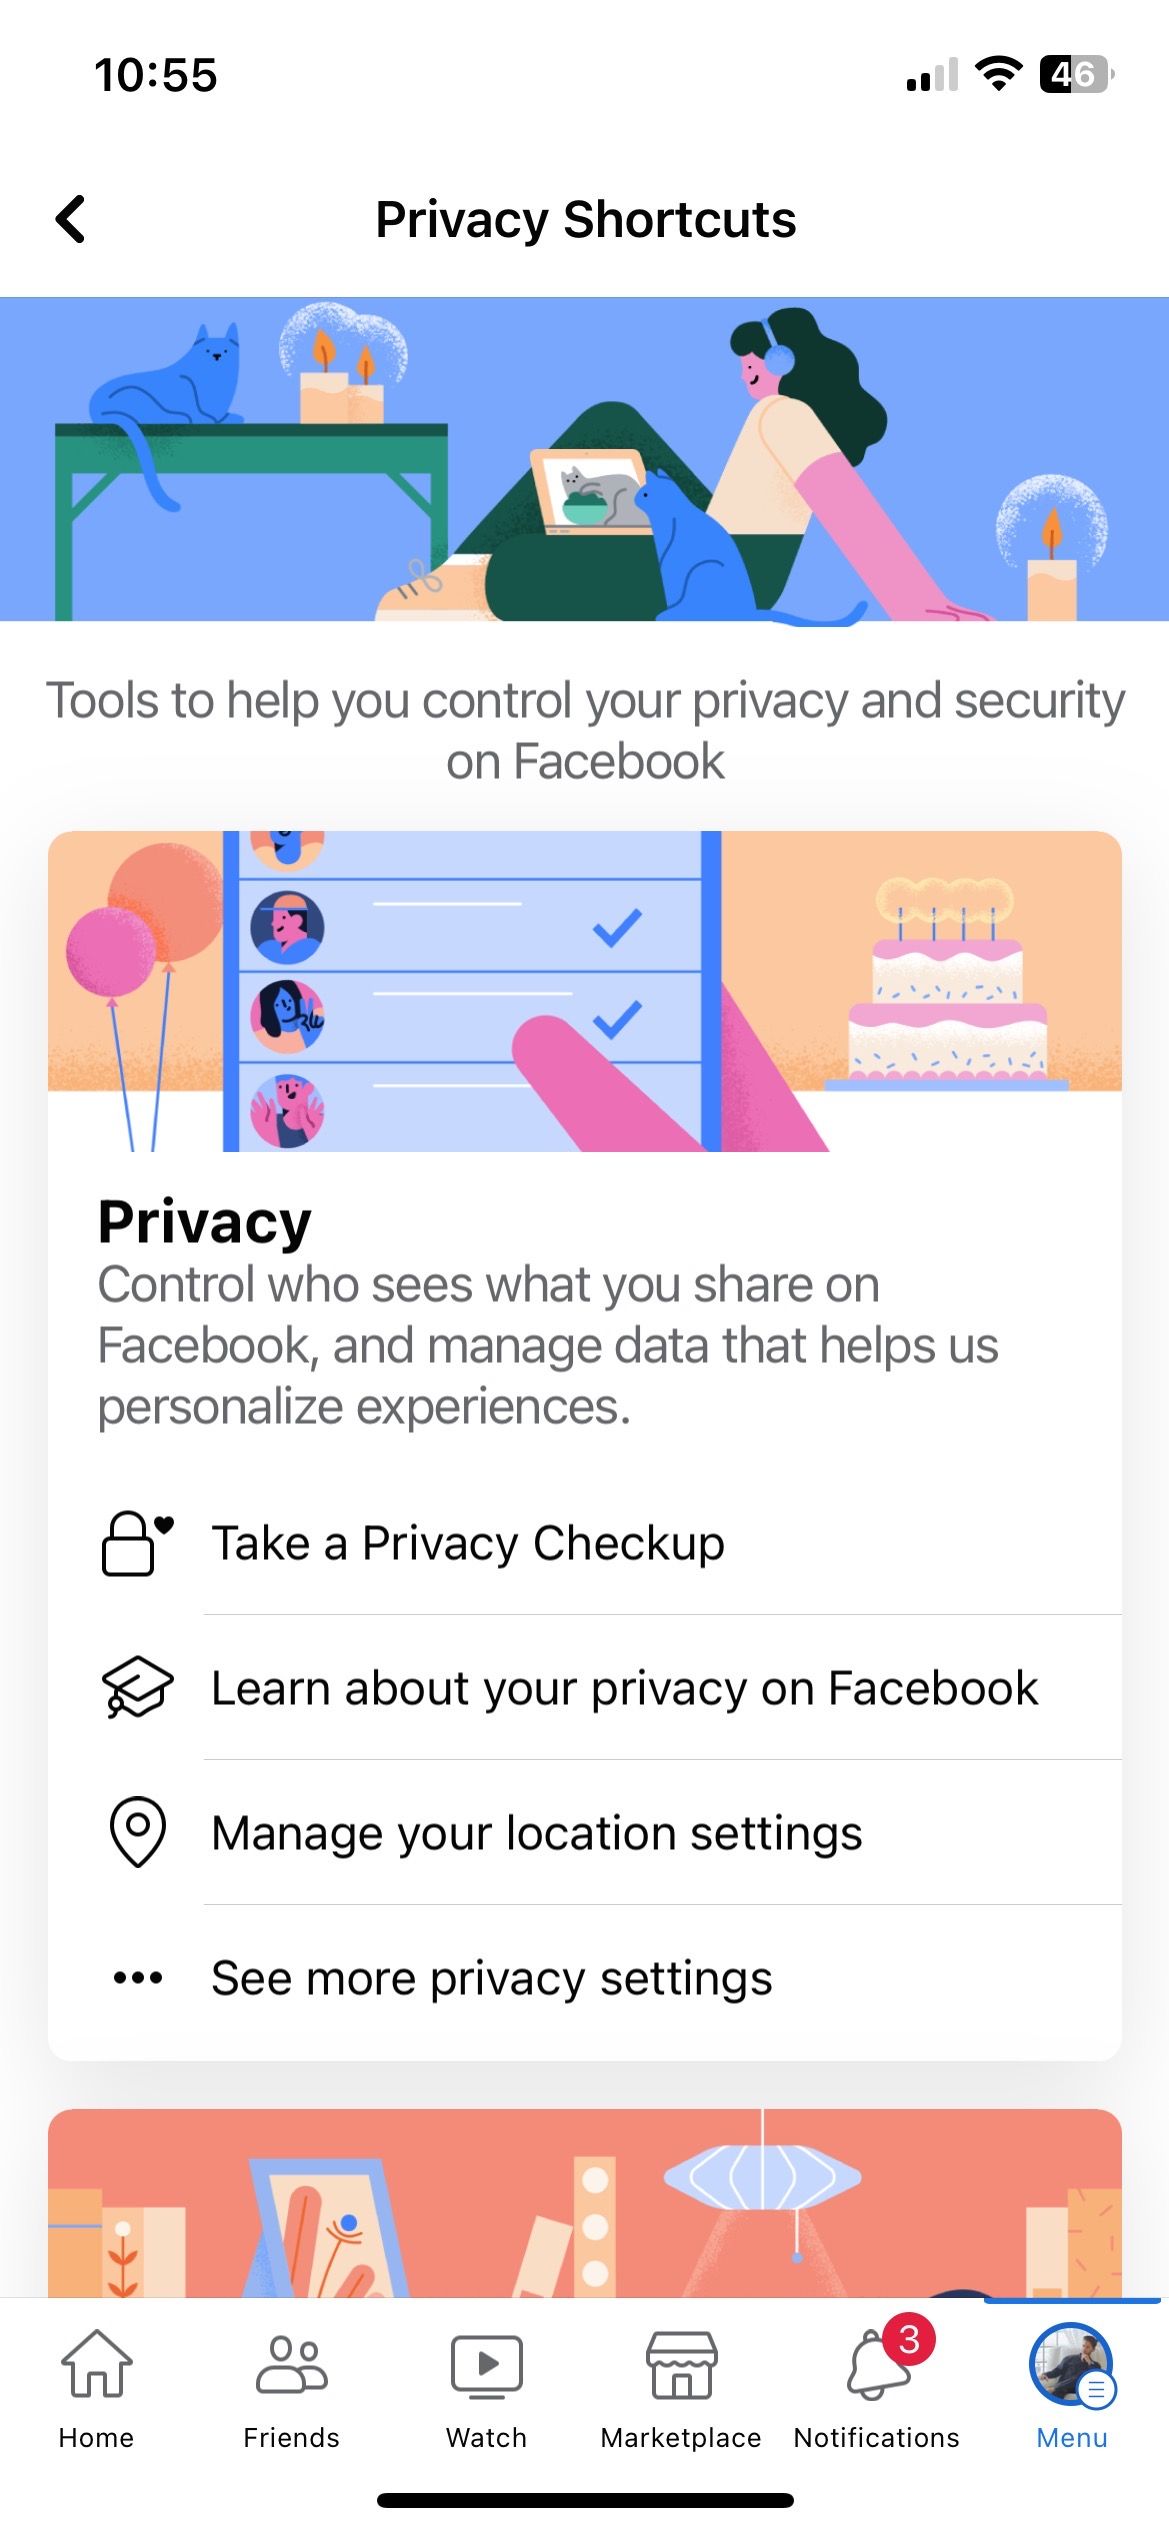 Take a privacy checkup on Facebook